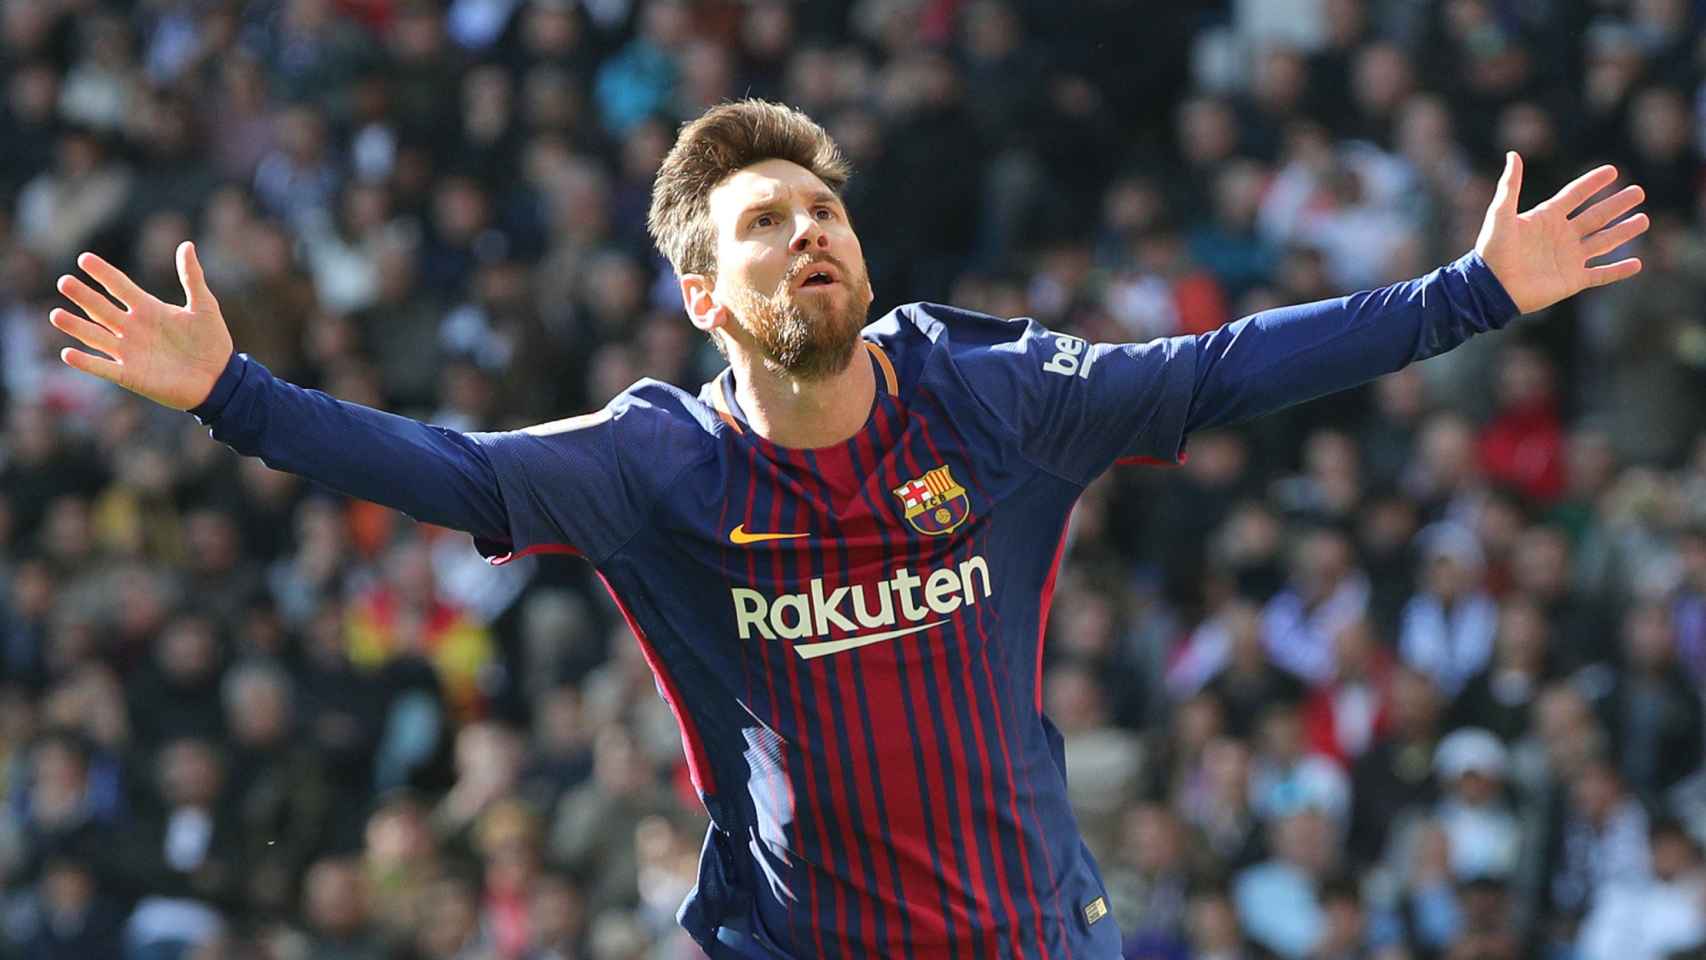 Messi celebra un gol en el Bernabéu.